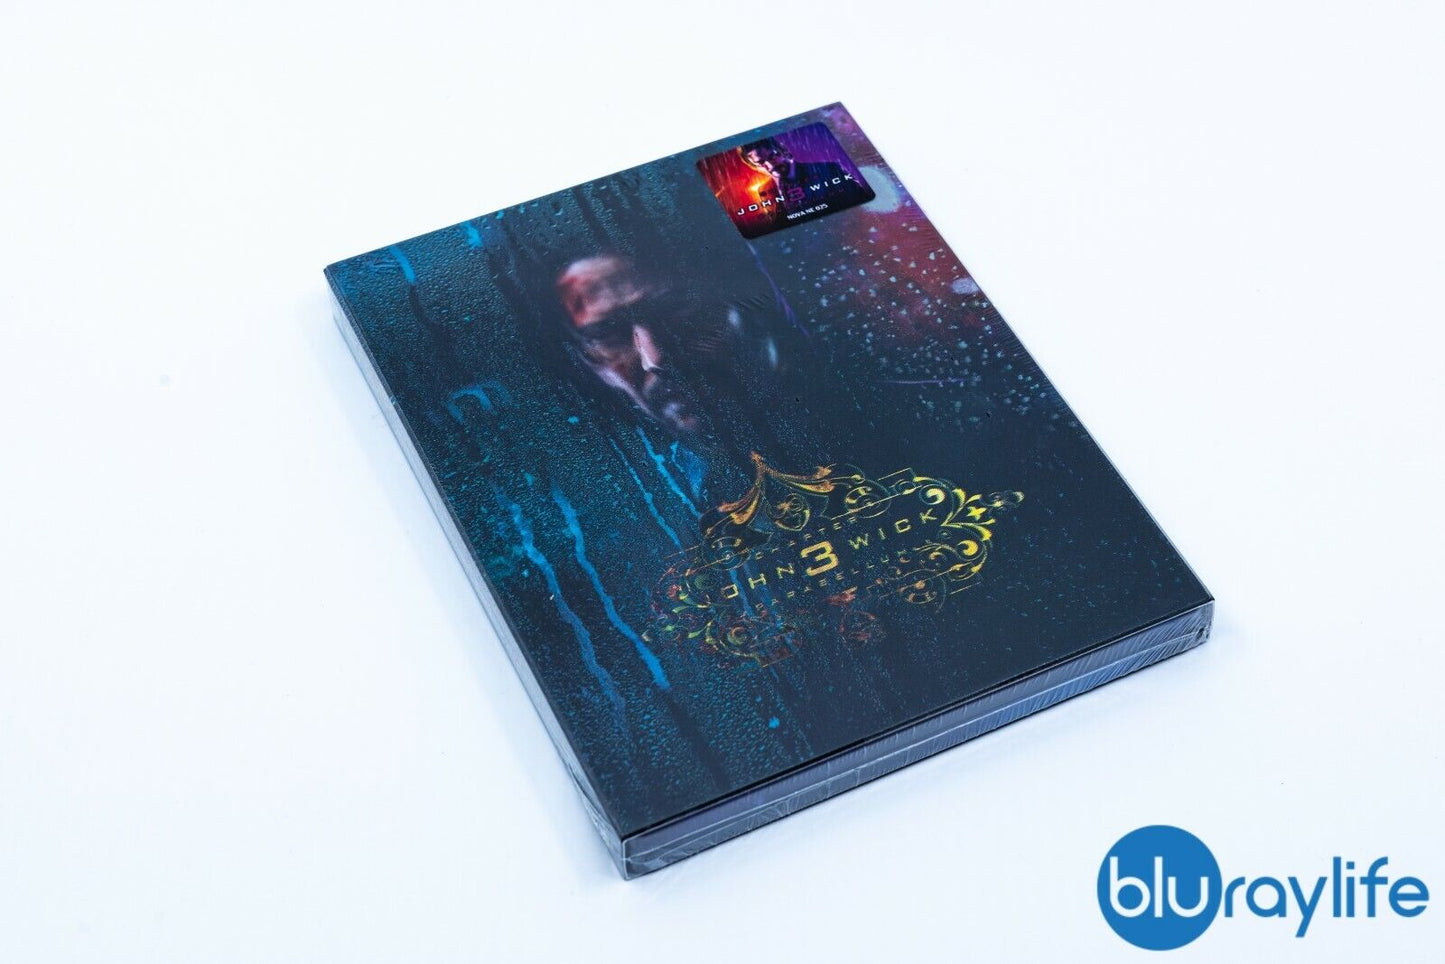 John Wick: Chapter 3 Parabellum Blu-ray Steelbook Novamedia Exclusive #25 Lenticular Slip